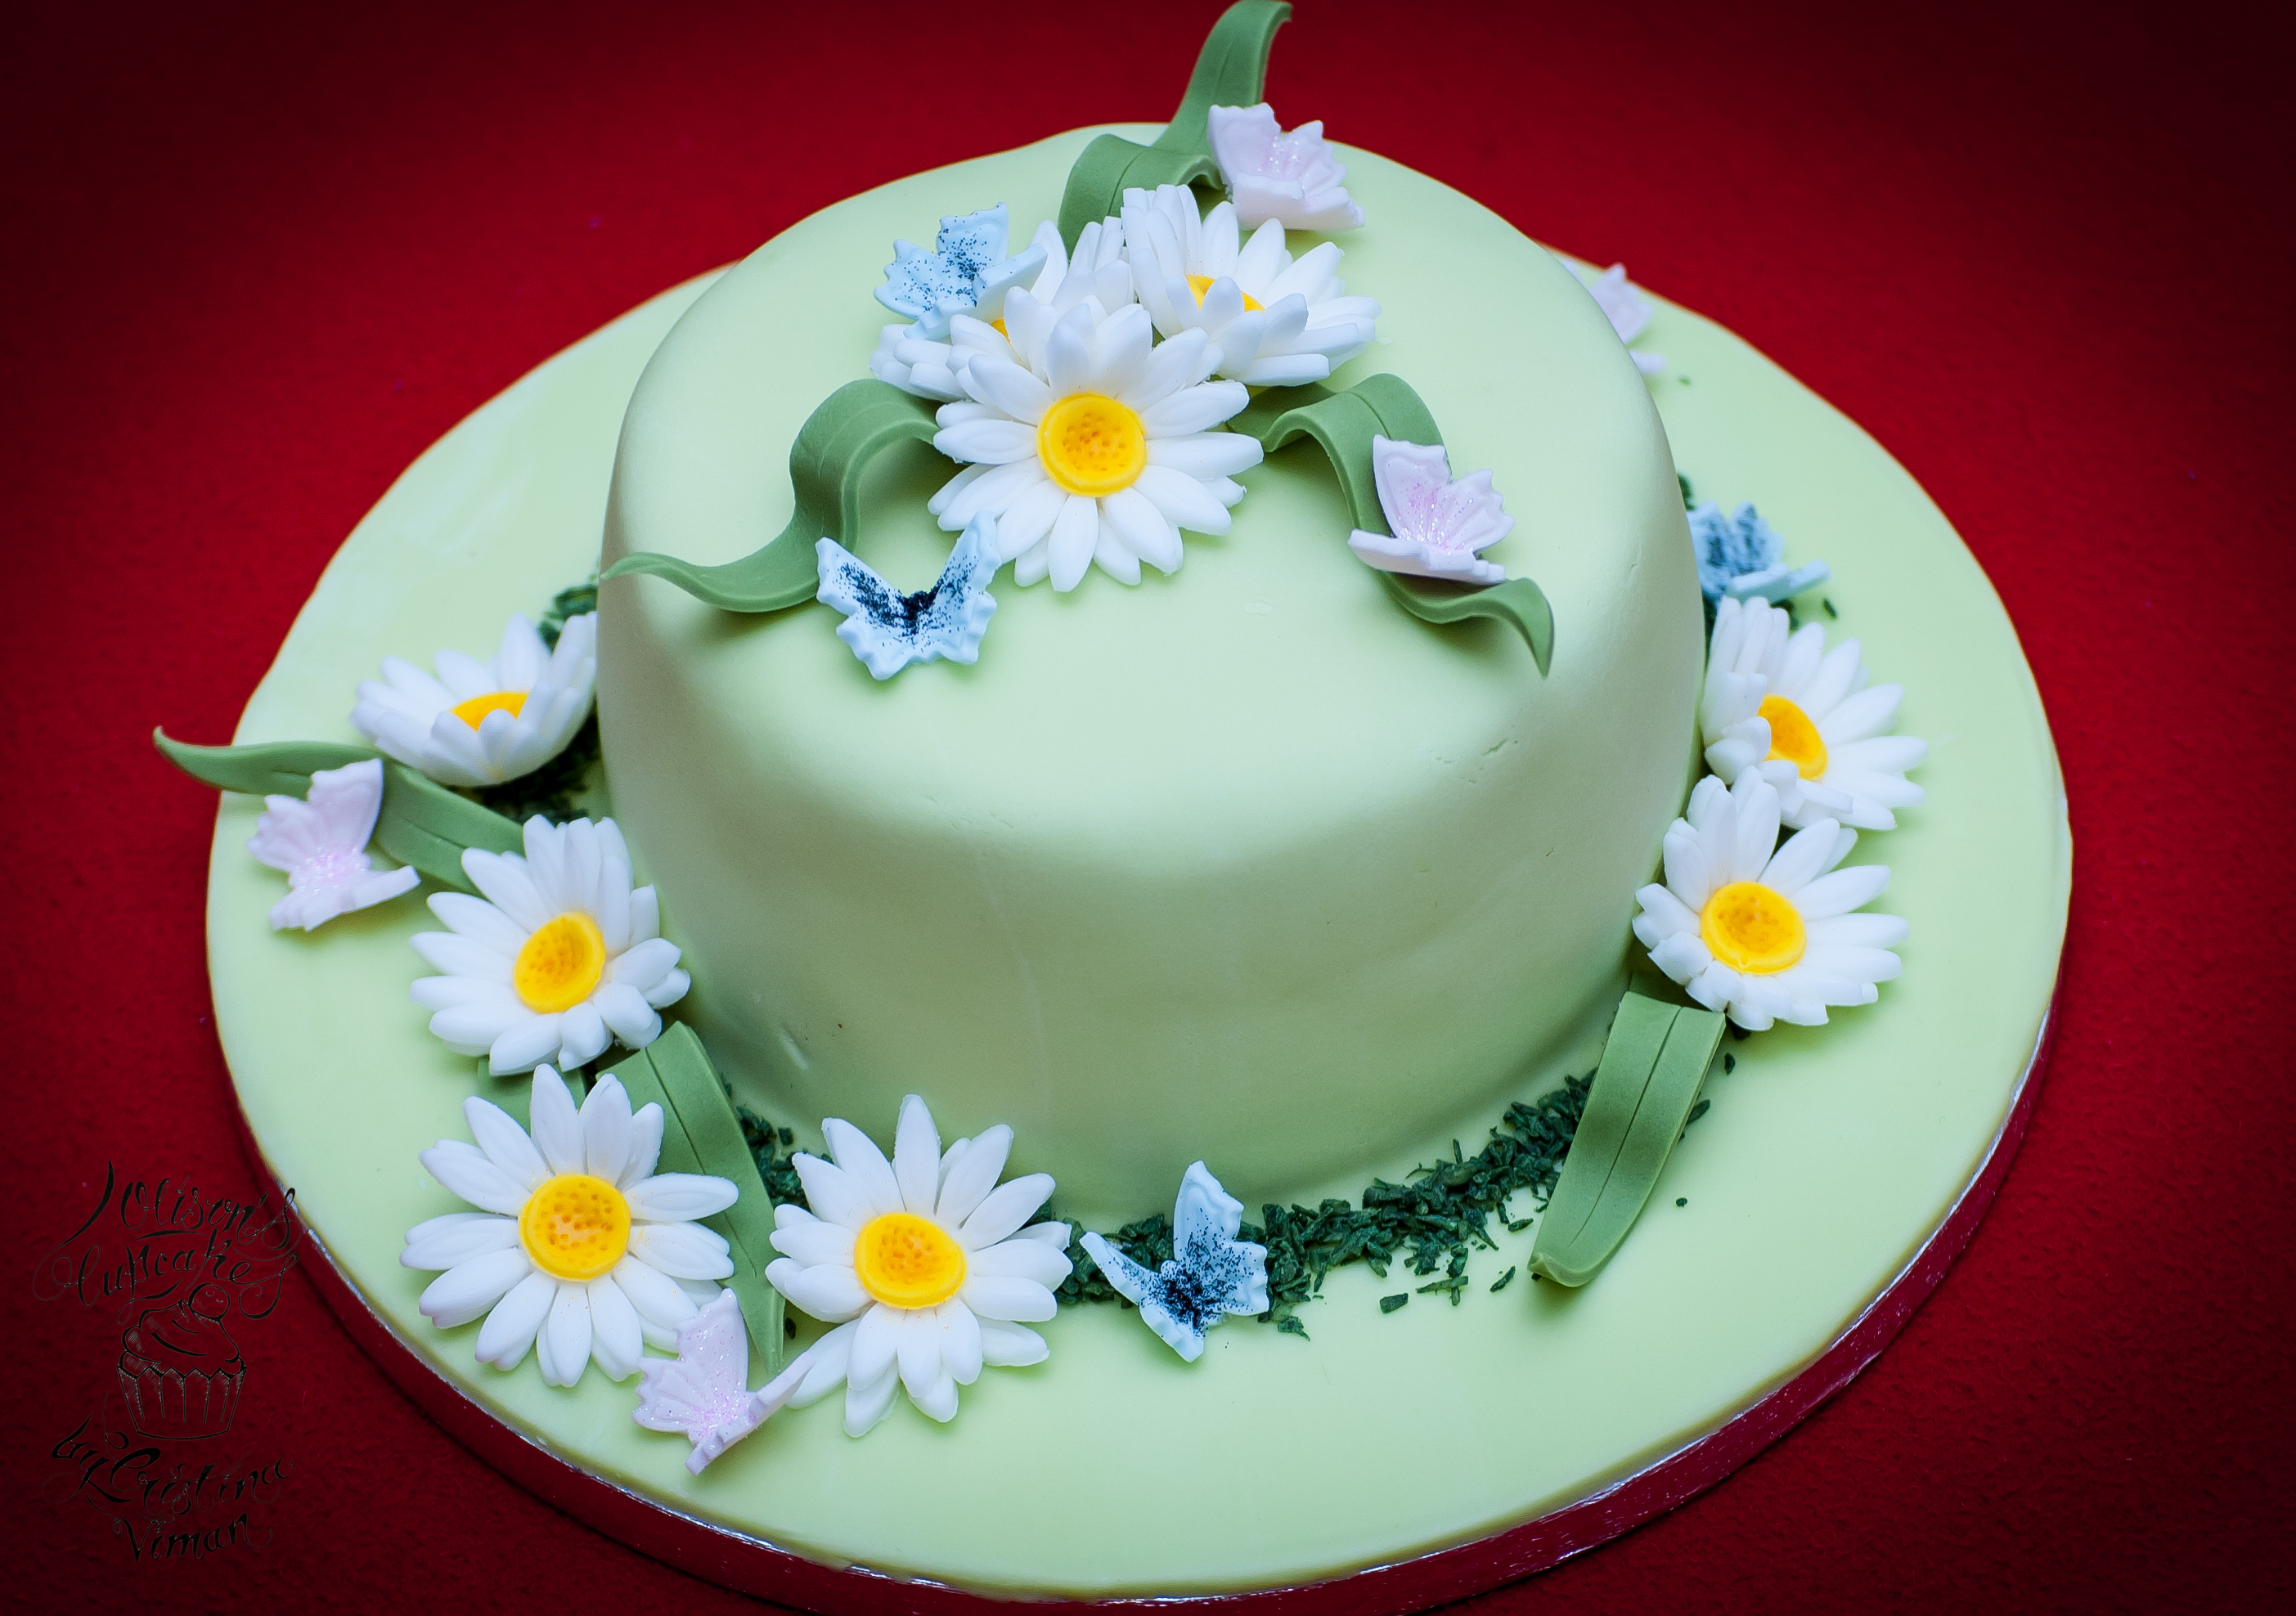 Happy Birthday Cake with Daisies.